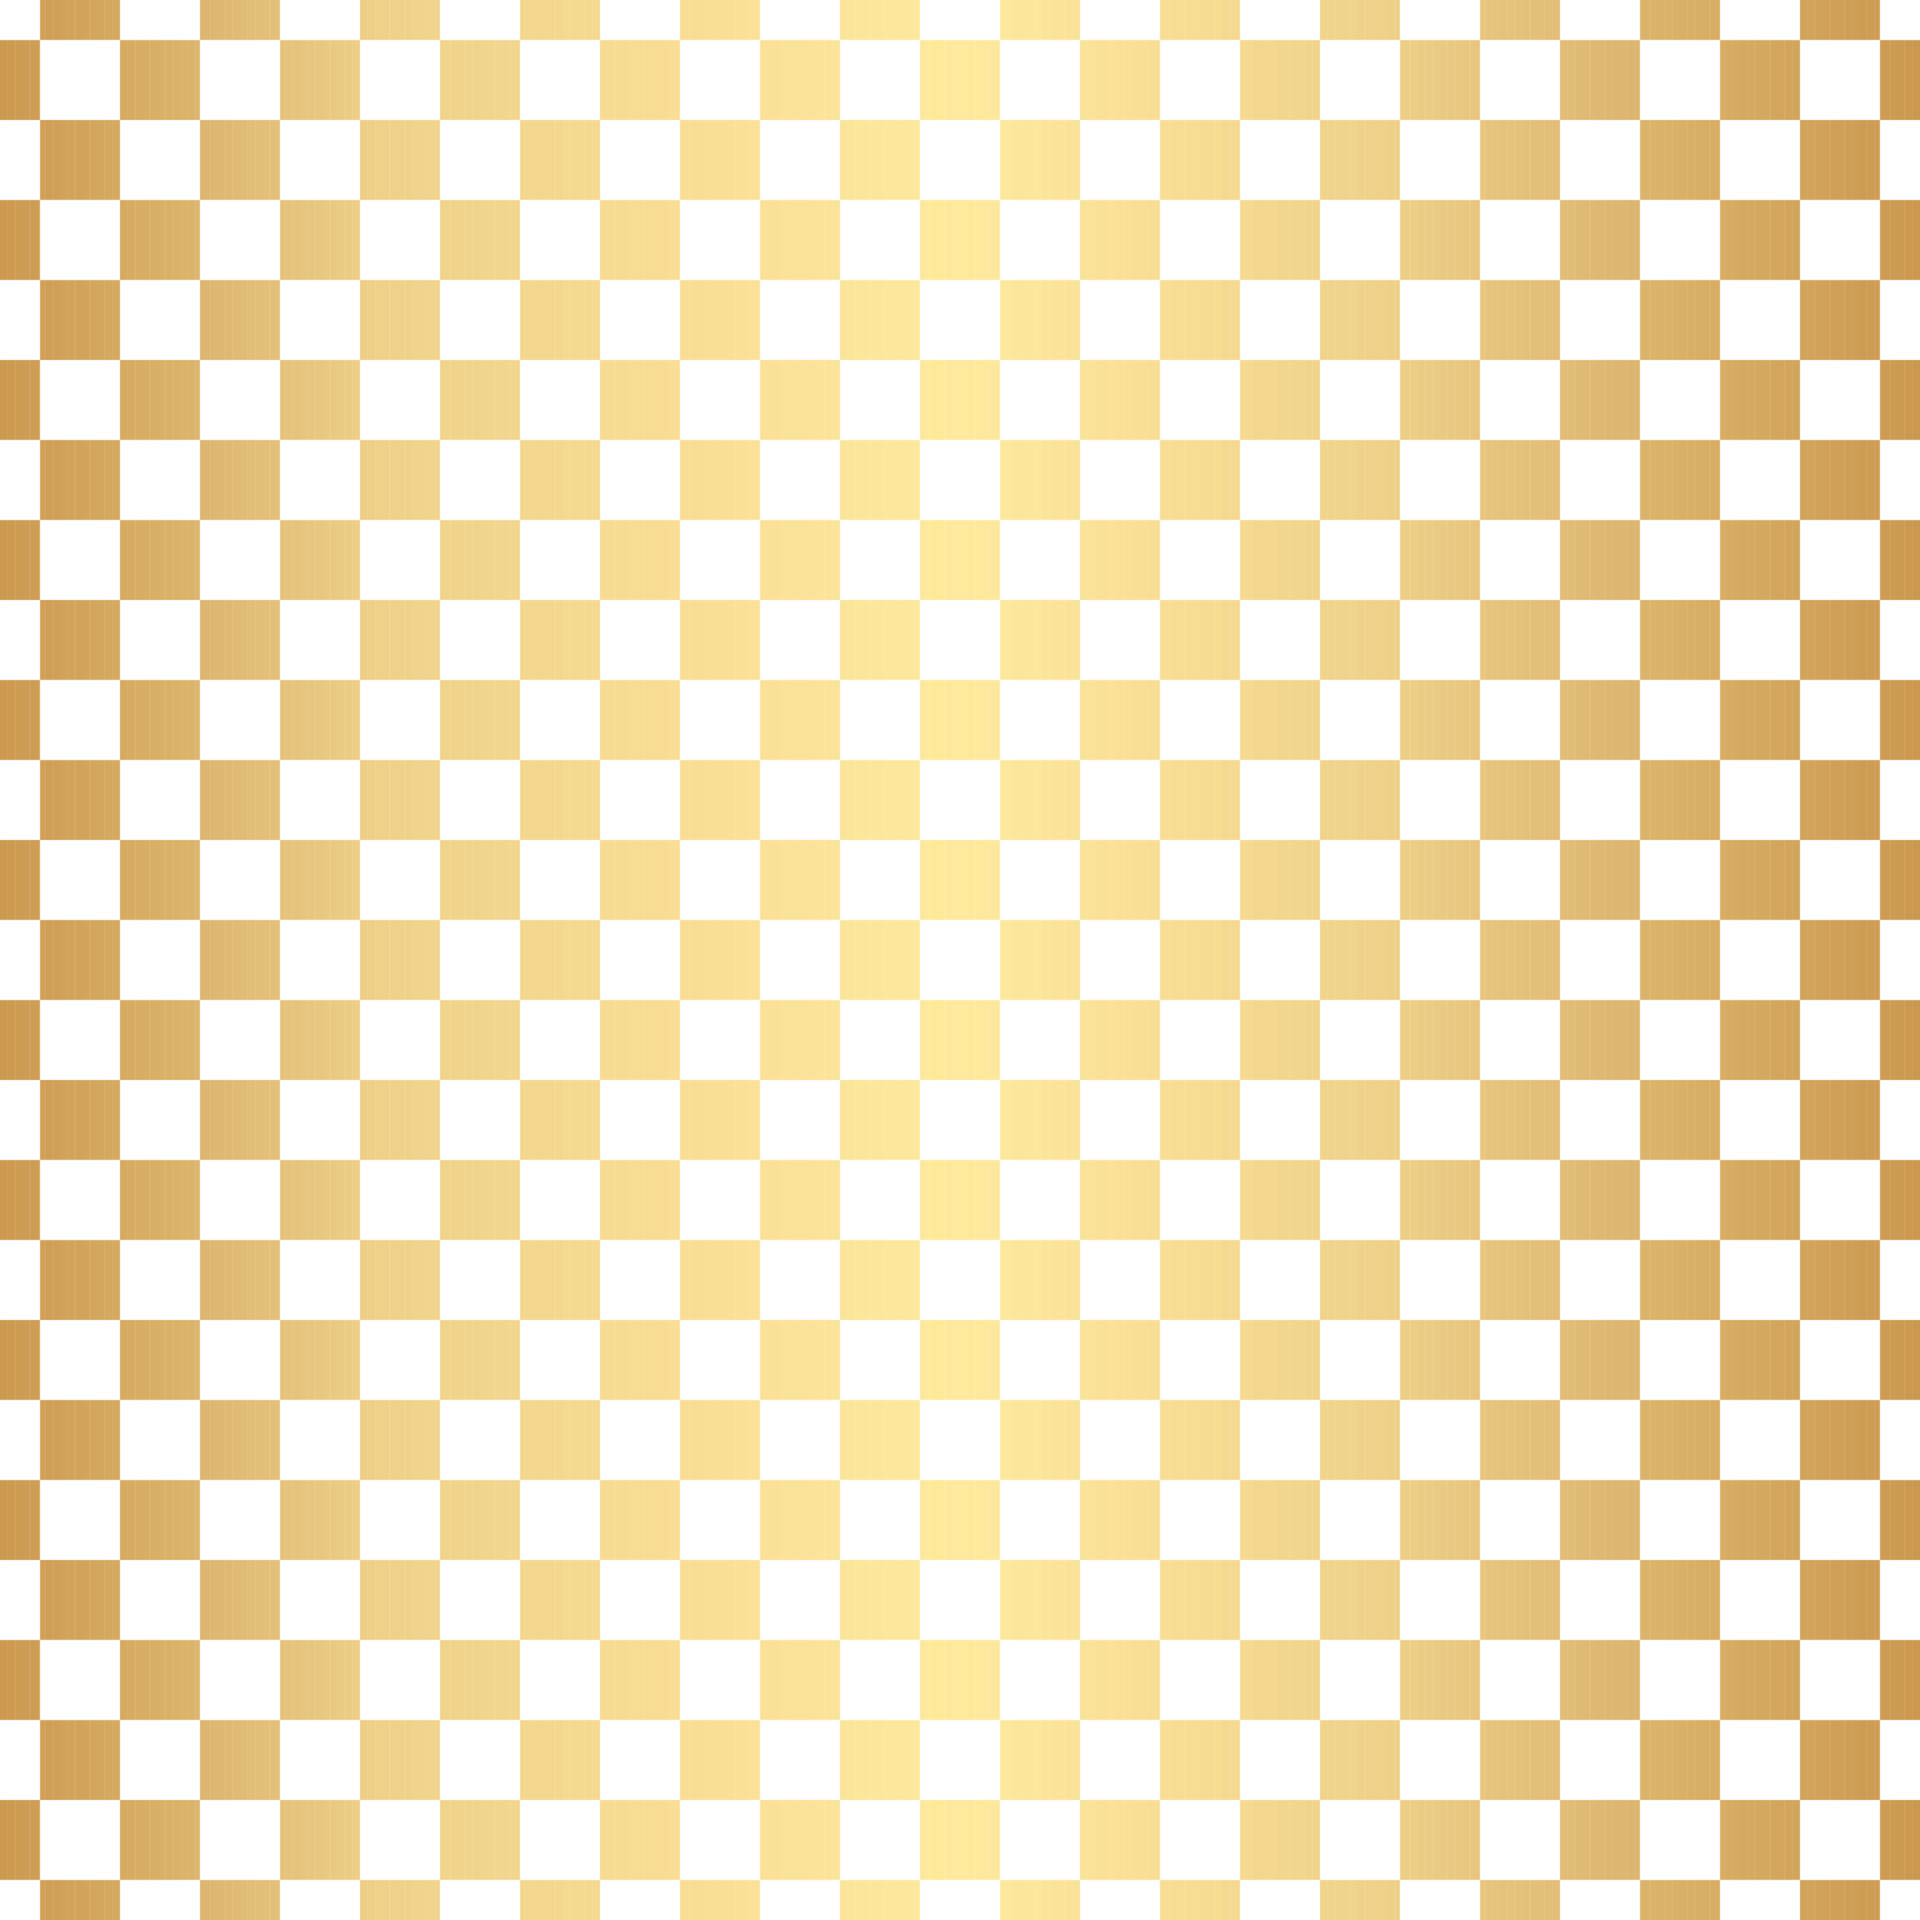 Textura xadrez dourado imagem vetorial de Irmairma© 89392842